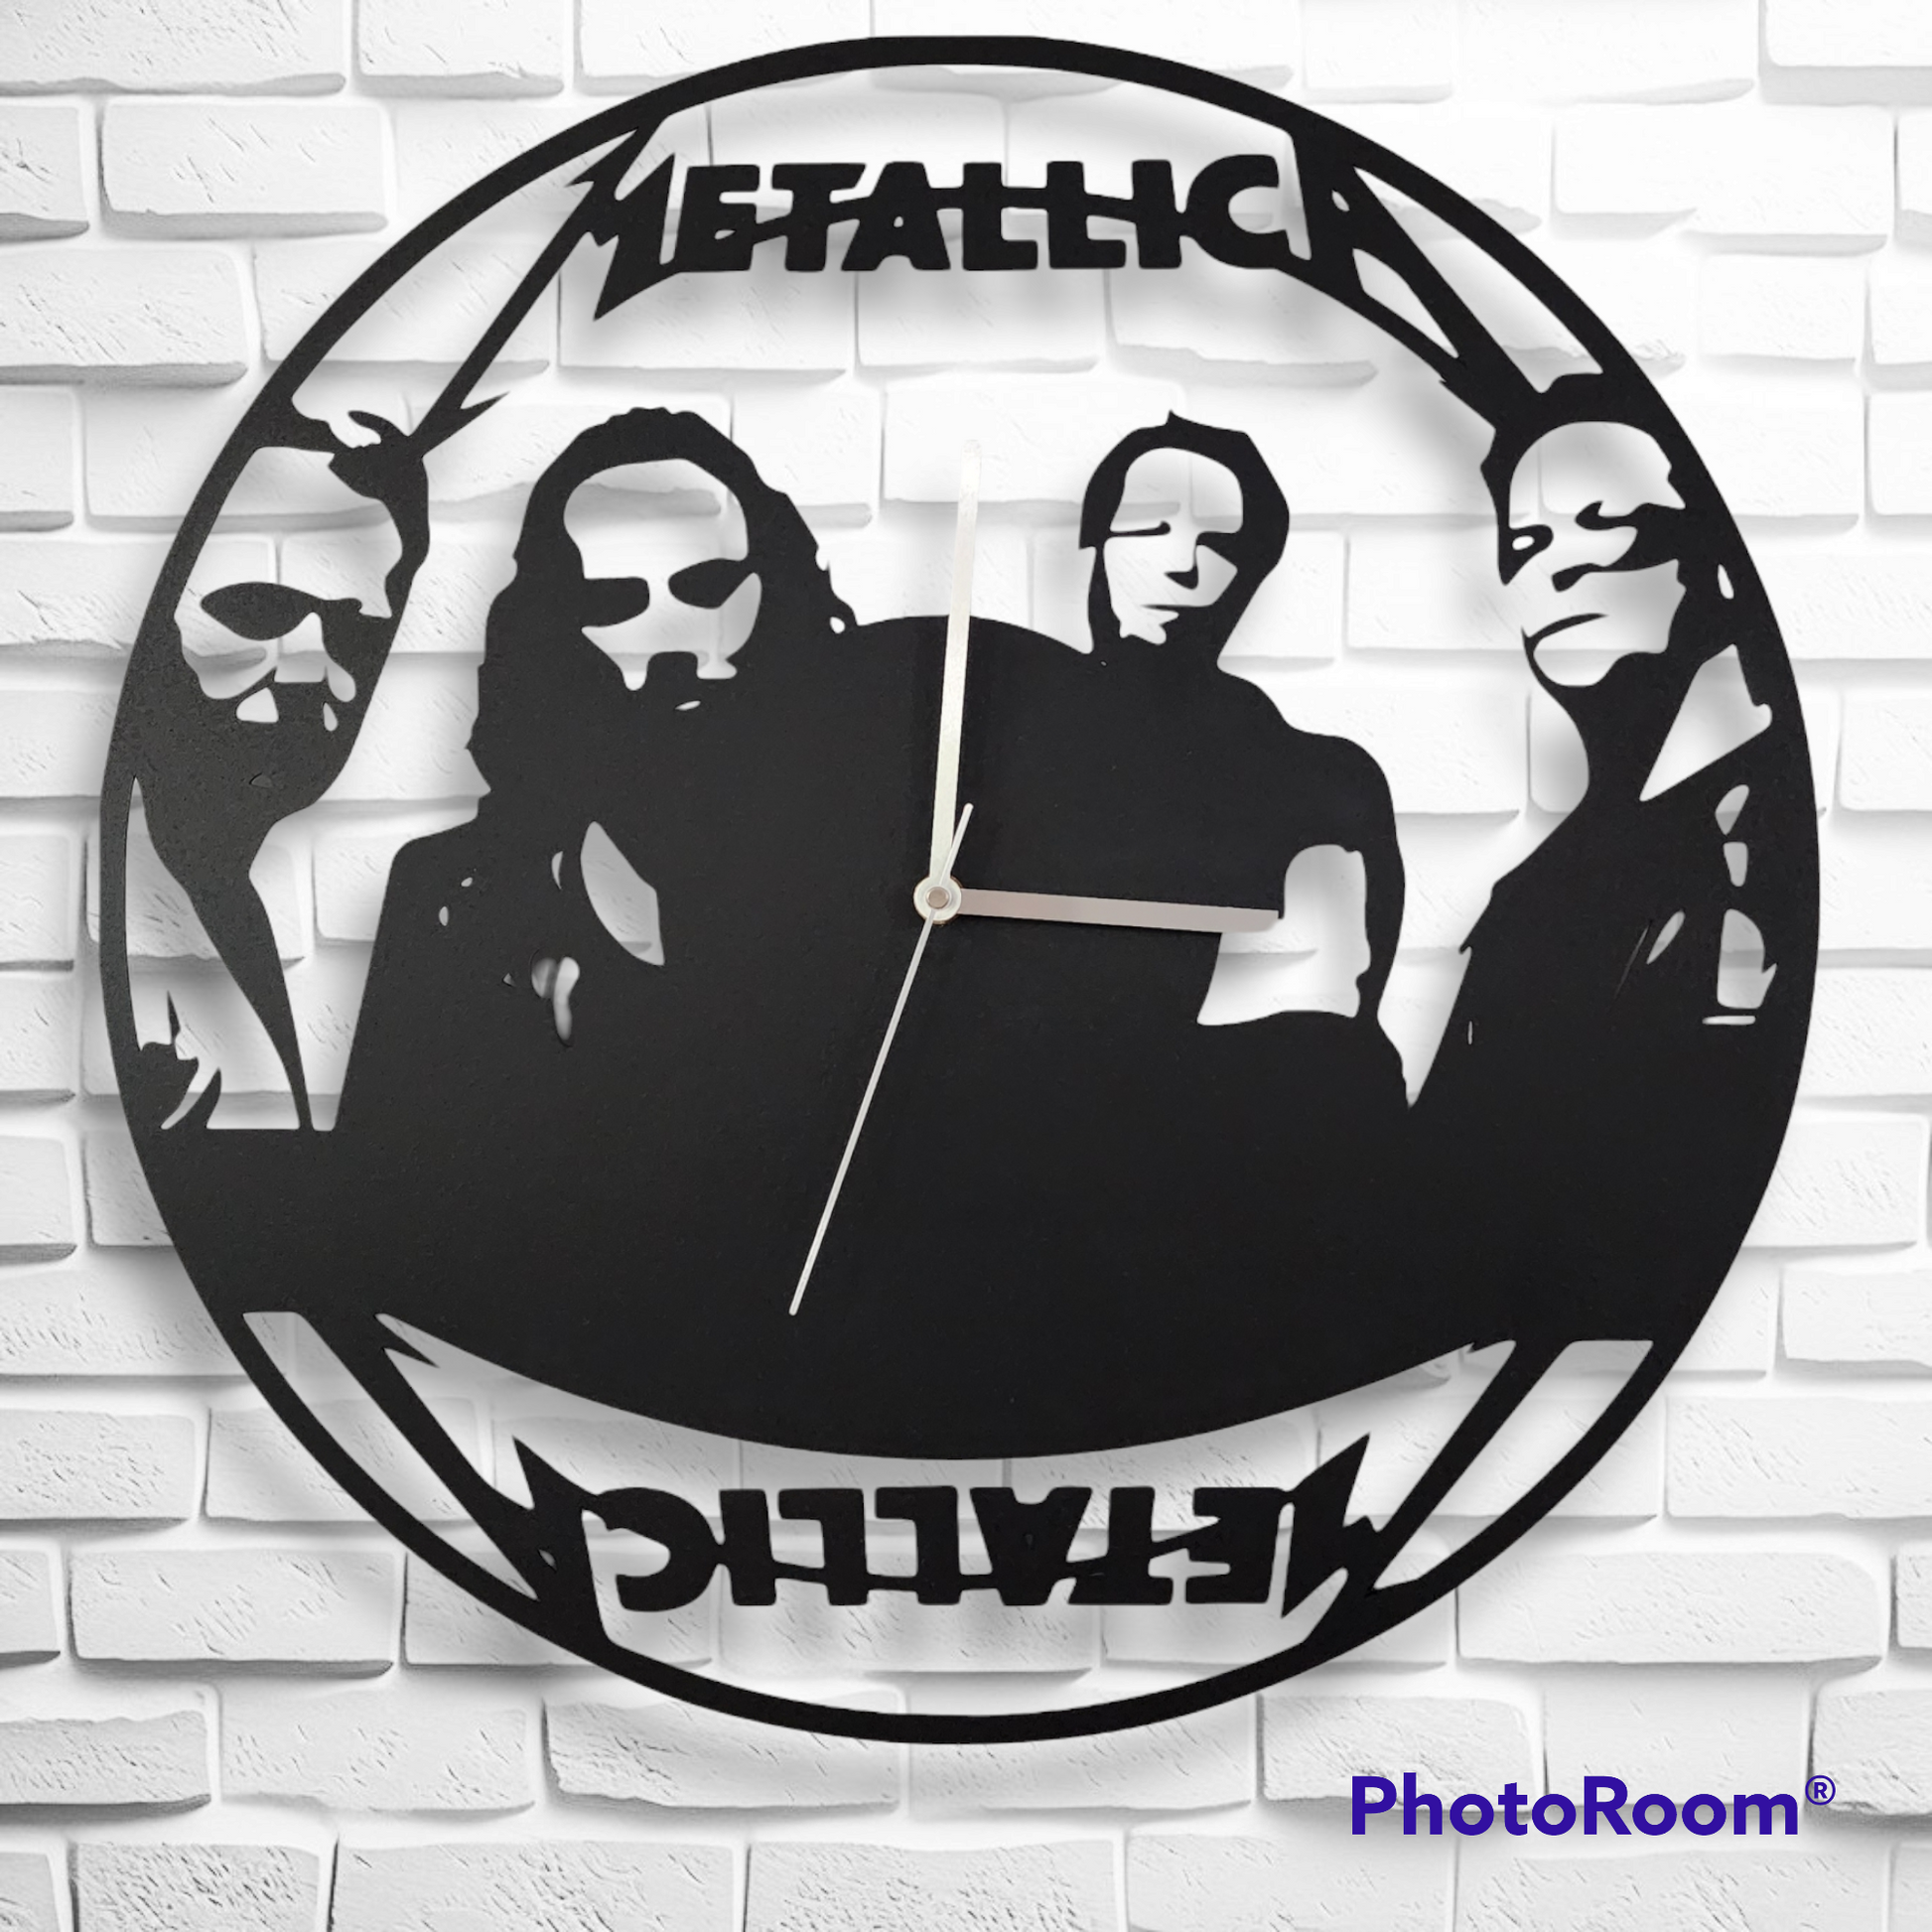 METALLICA Vinyl Clock - Vinyl Record Wall Clock Art 2 - Vinyl